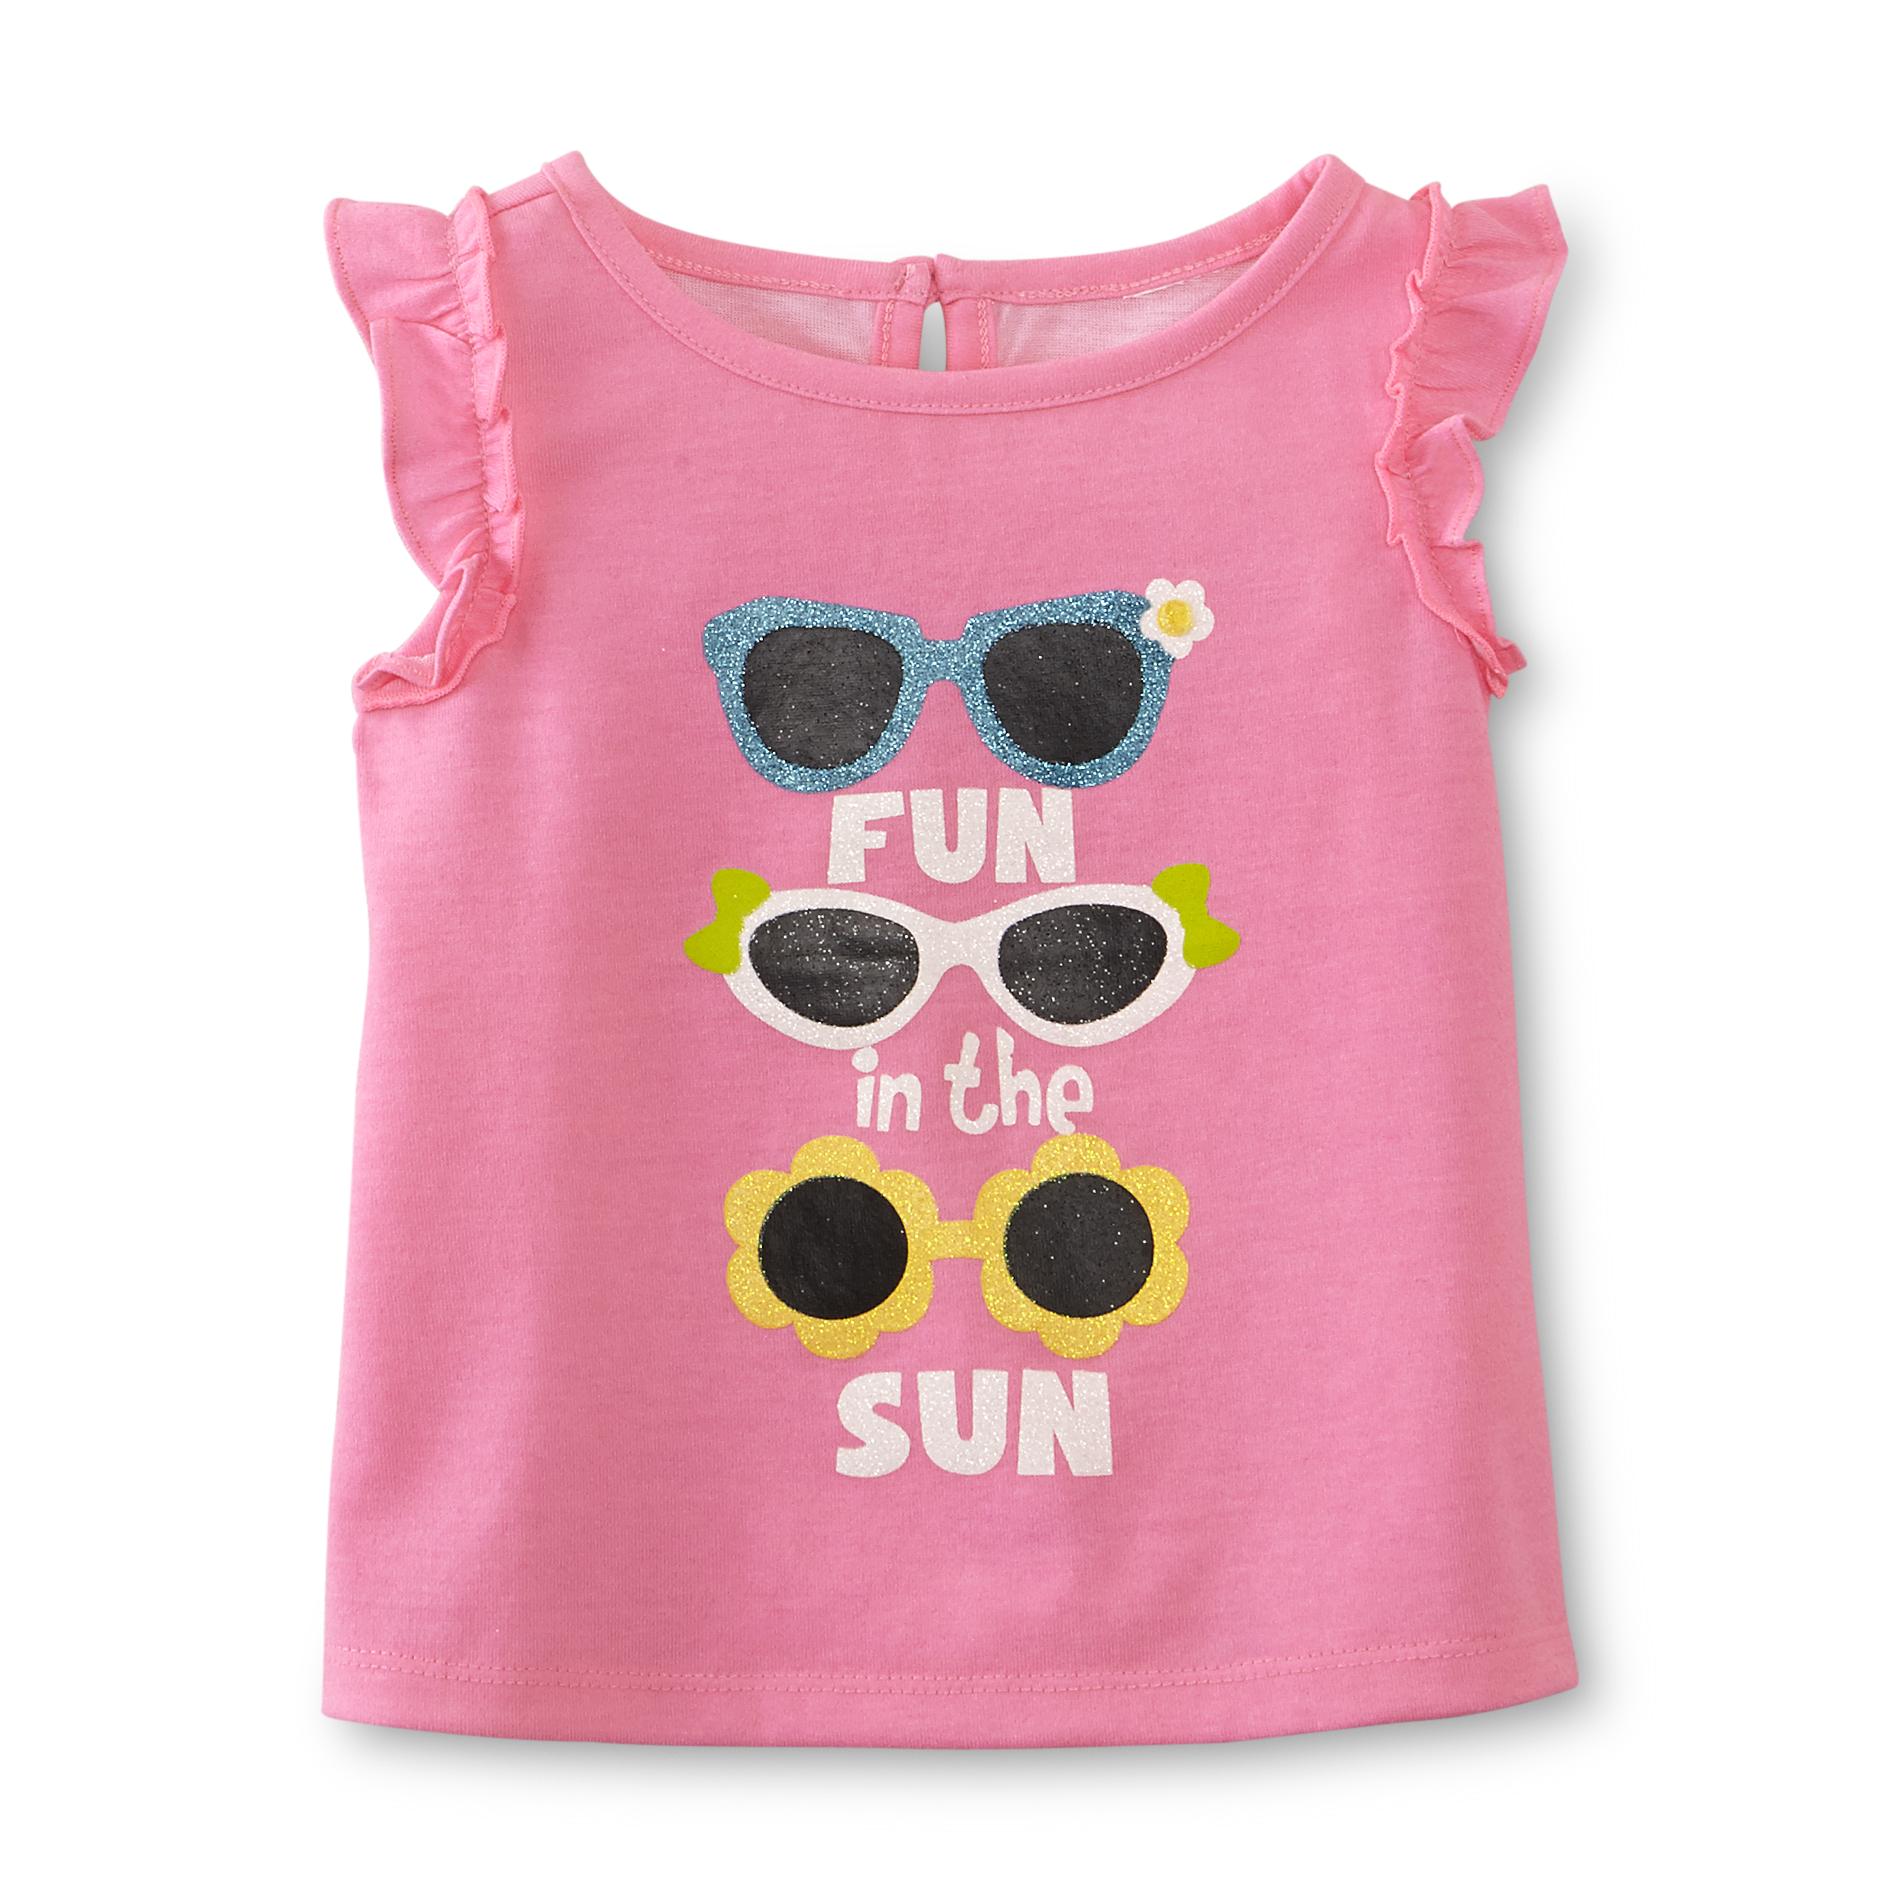 WonderKids Infant & Toddler Girl's Graphic Tank Top - Sunglasses